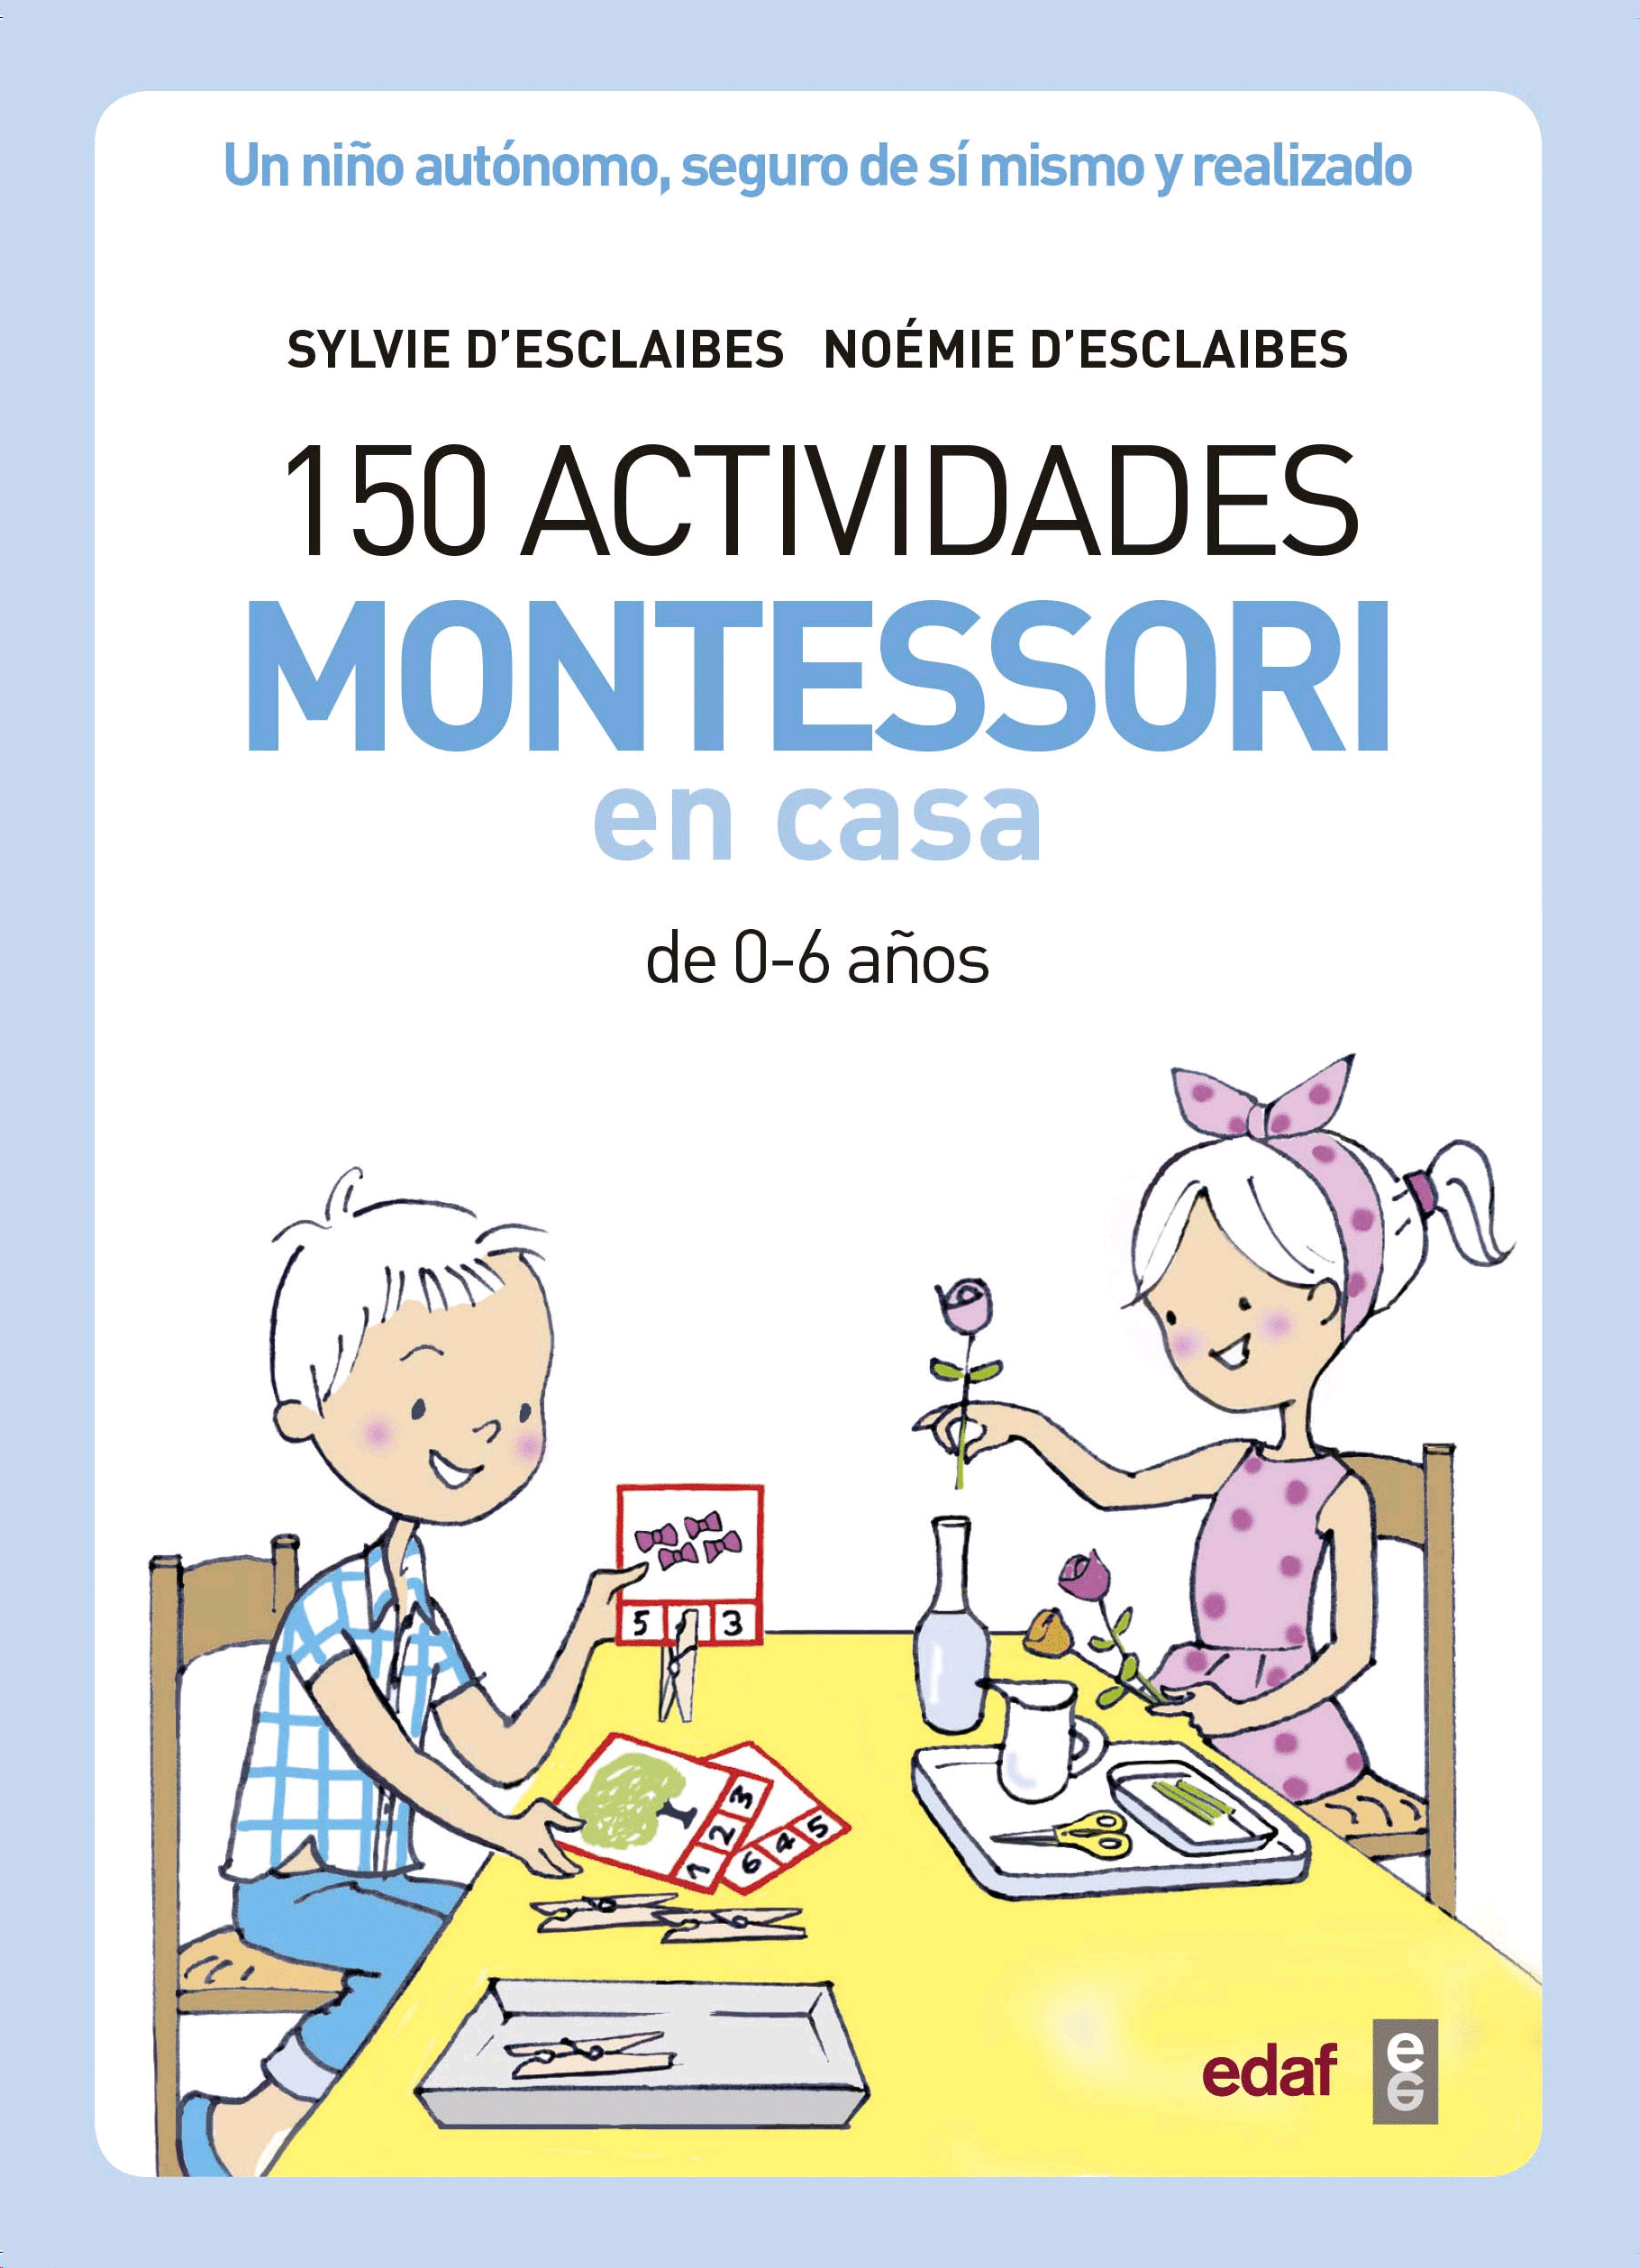 150 actividades Montessori en casa de 0-6 años. D'Esclaibes, Sylvie /  D'Esclaibes, Noémie. Libro en papel. 9788441439191 Cafebrería El Péndulo